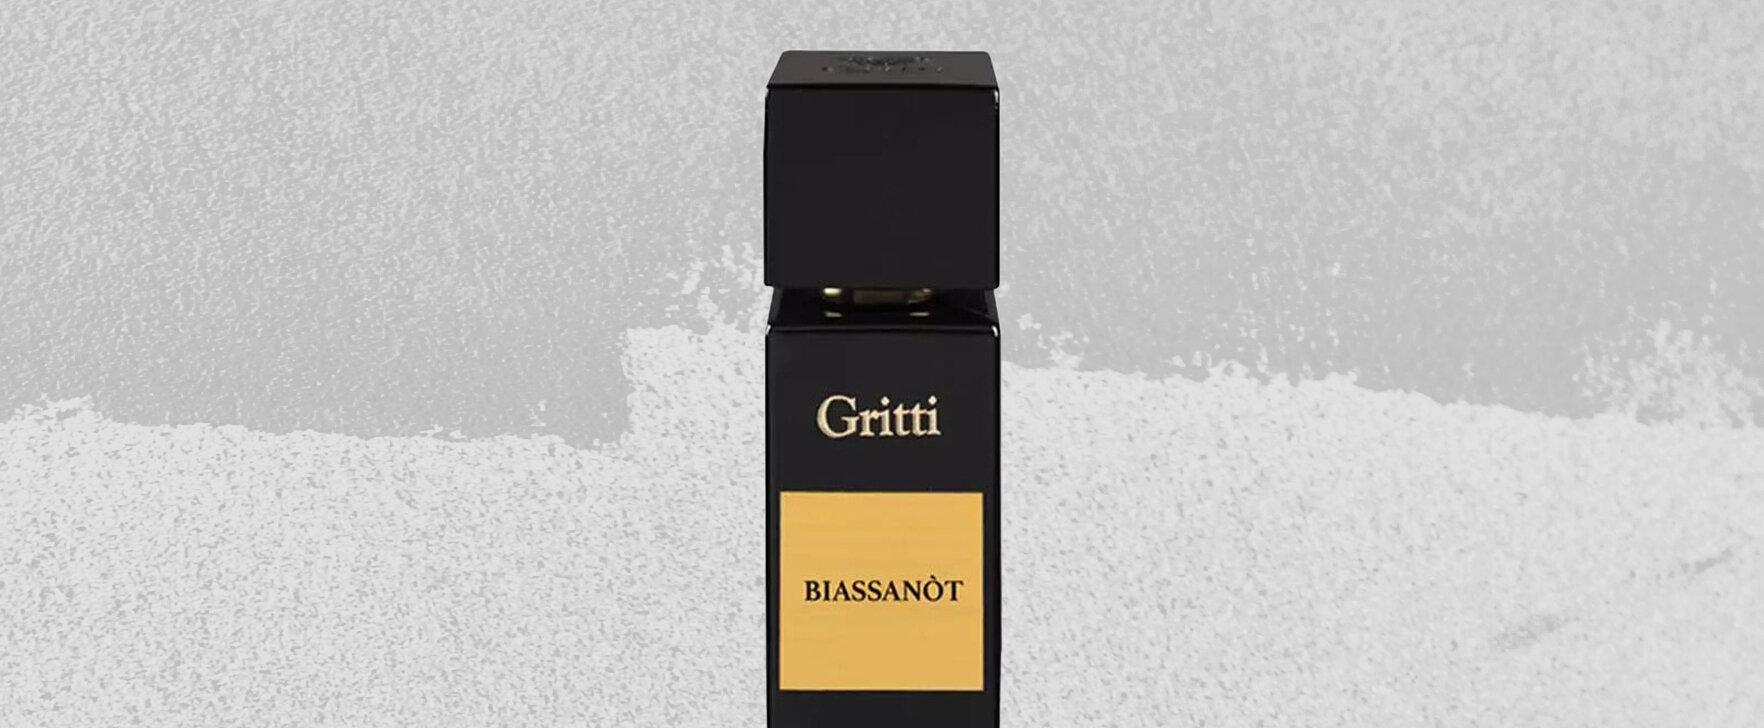 A Fragrance Journey Through the Night: The New Biassanòt Eau de Parfum From Gritti